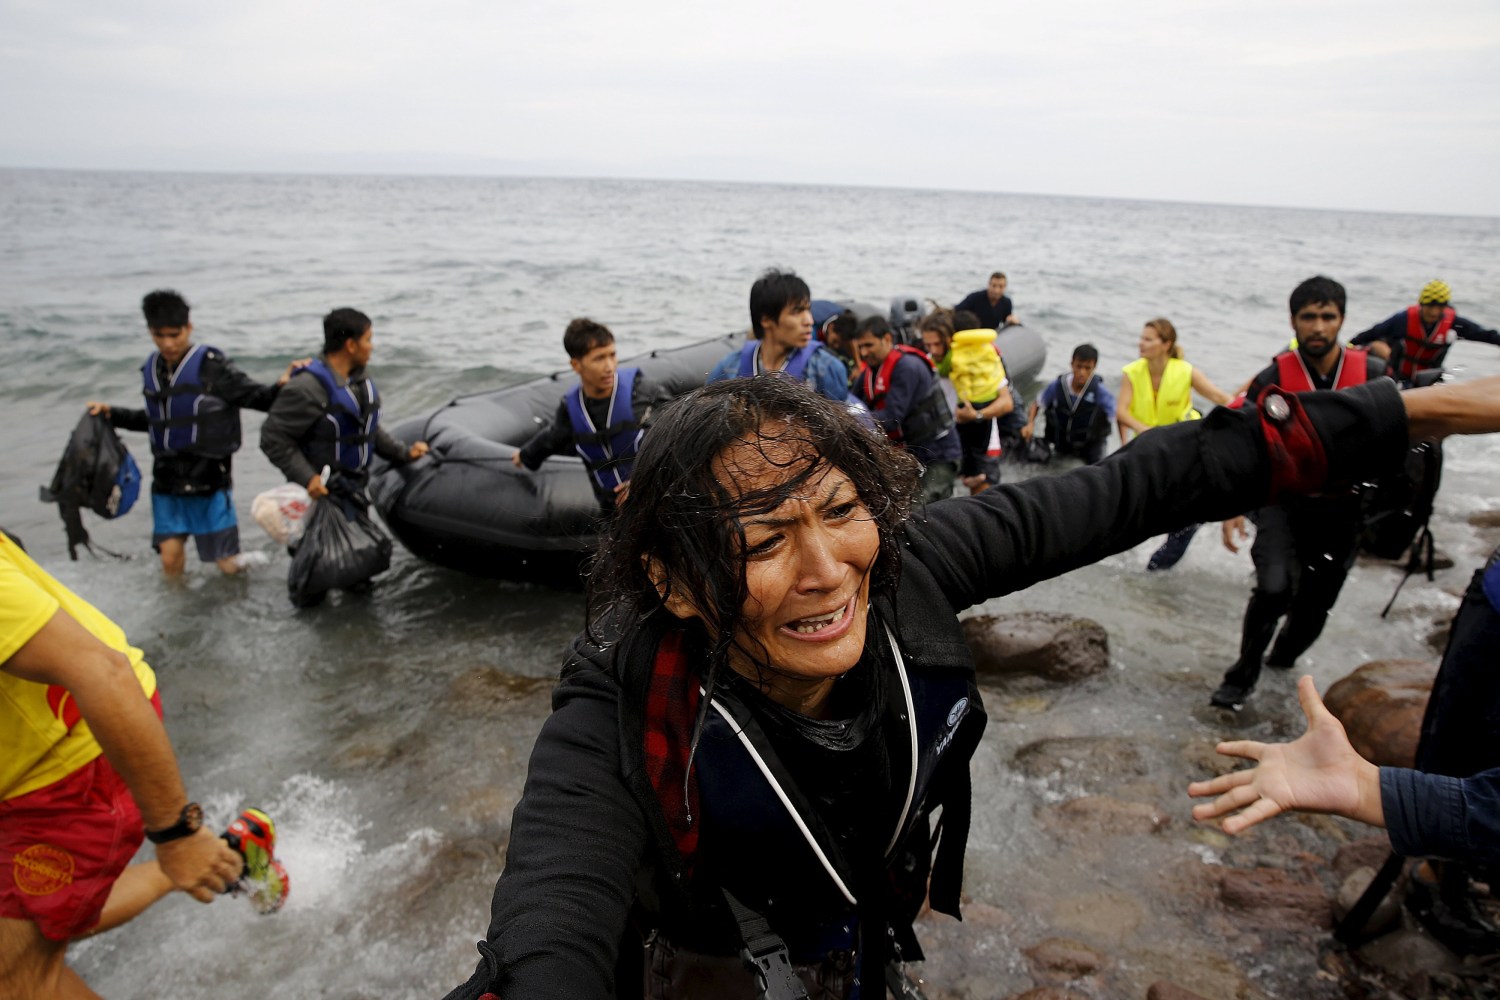 Mediterranean migrant crisis: EU refugee quotas to be 